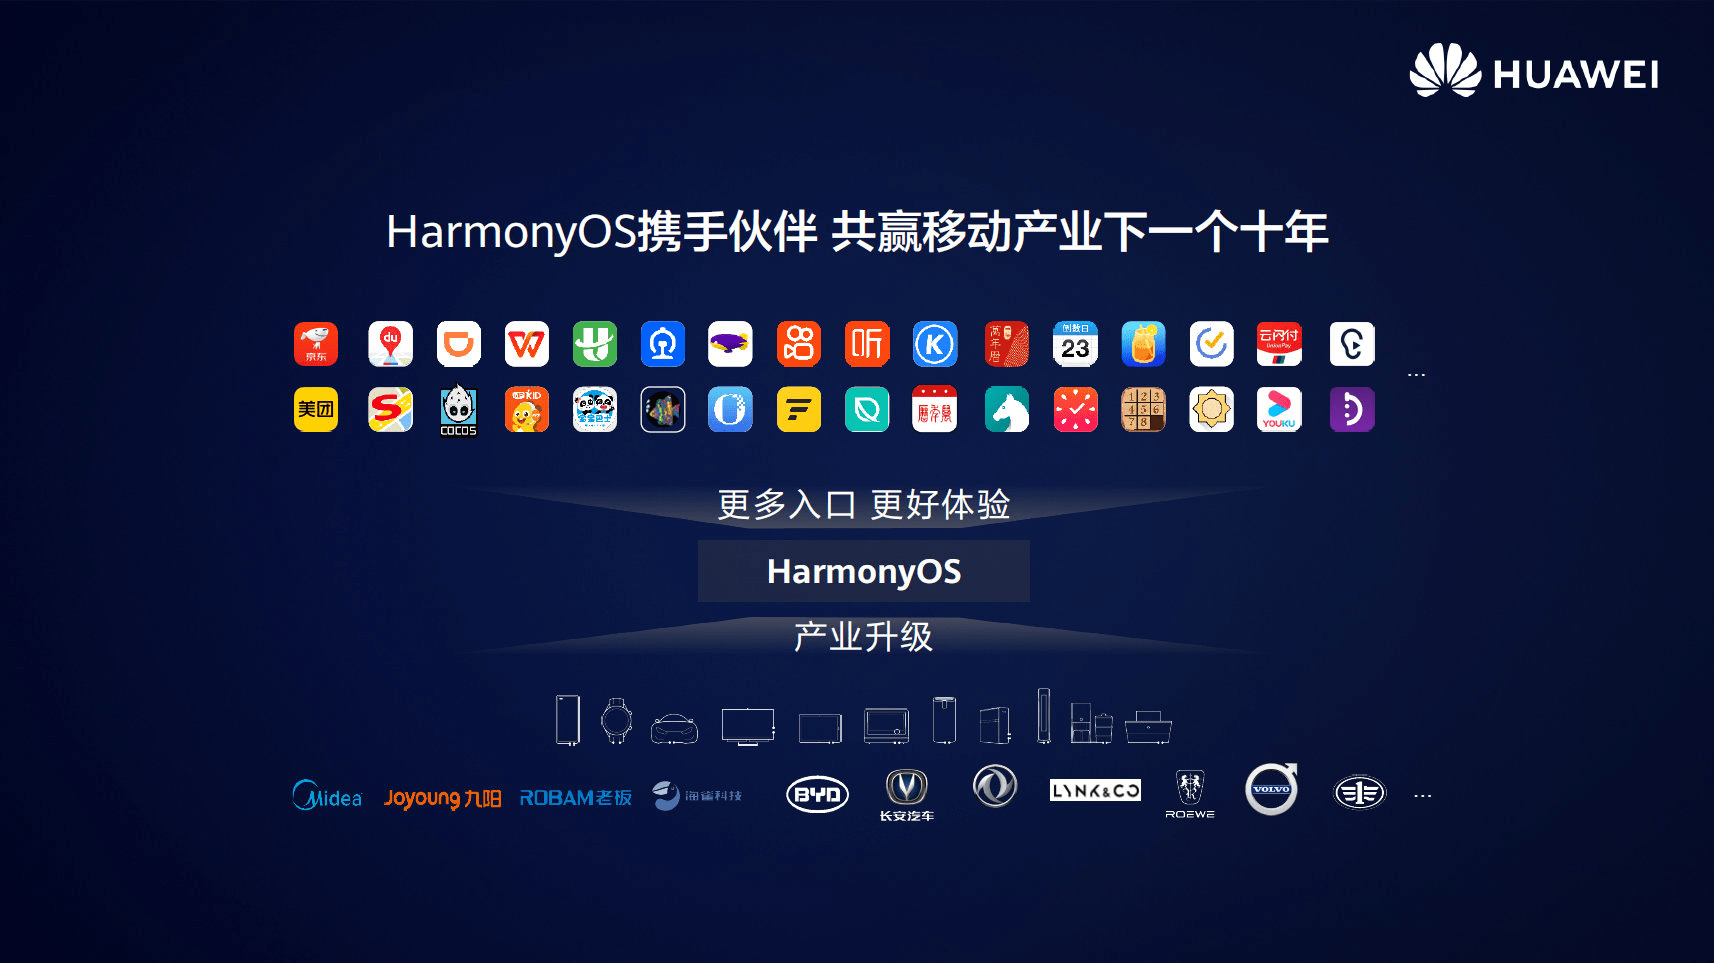 harmonyos 2.0手机开发者beta版正式发布!和安卓系统一样?